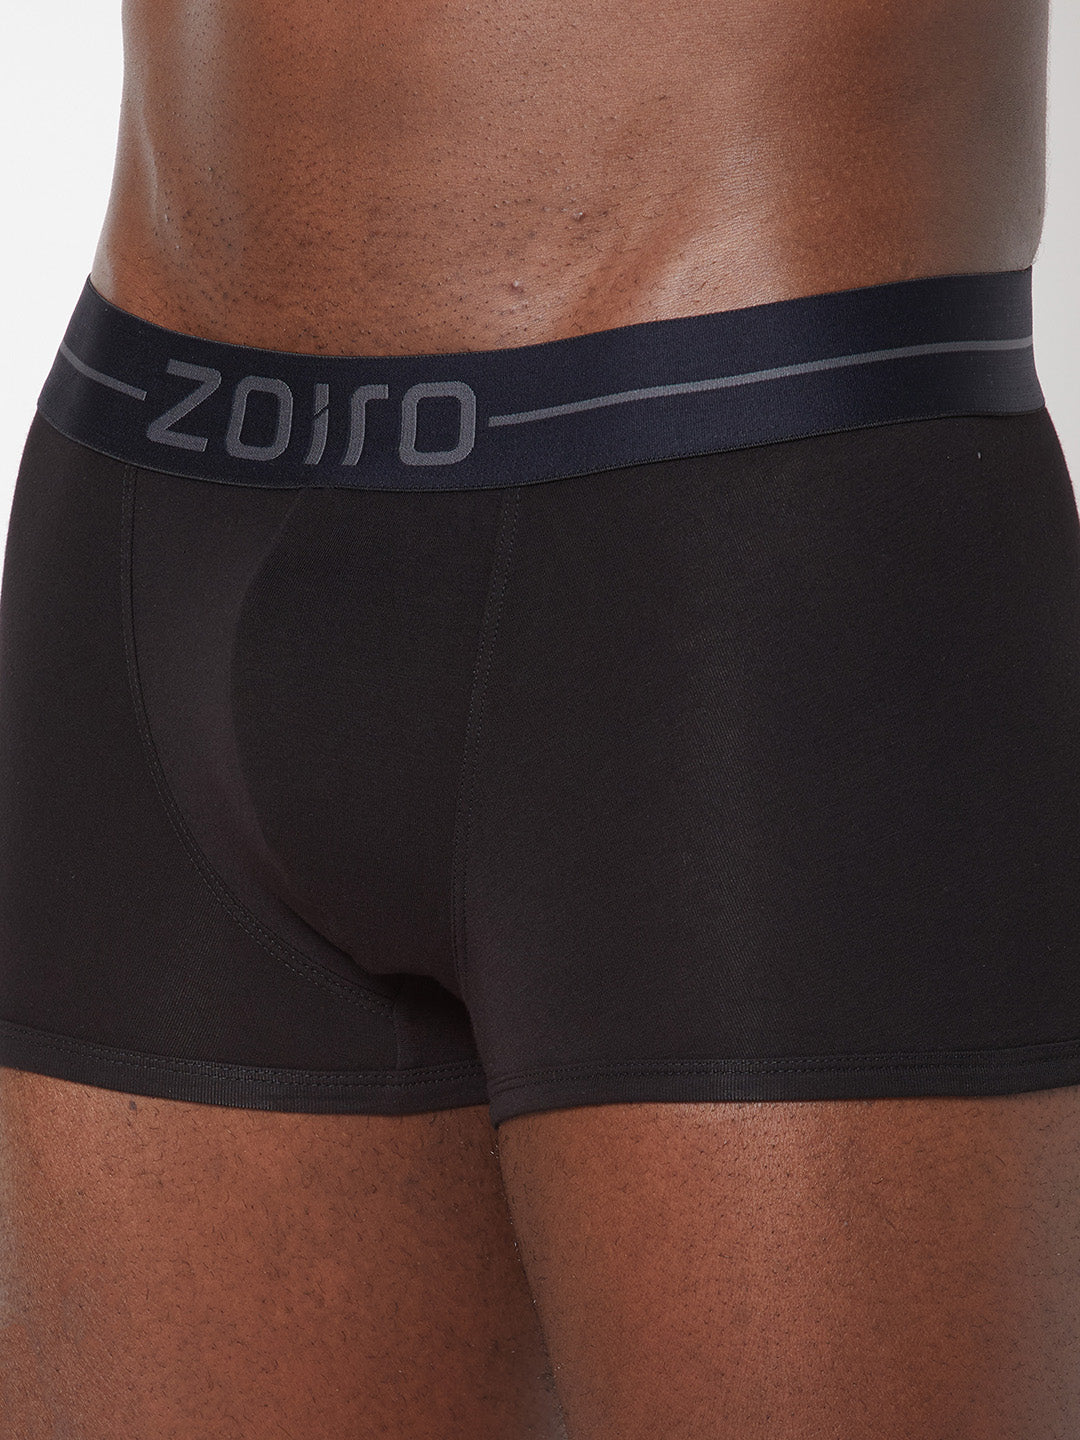 Zoiro Men&#39;s Cotton, Modal, Spandex Softs Trunk Black (Black Elastic Branding)